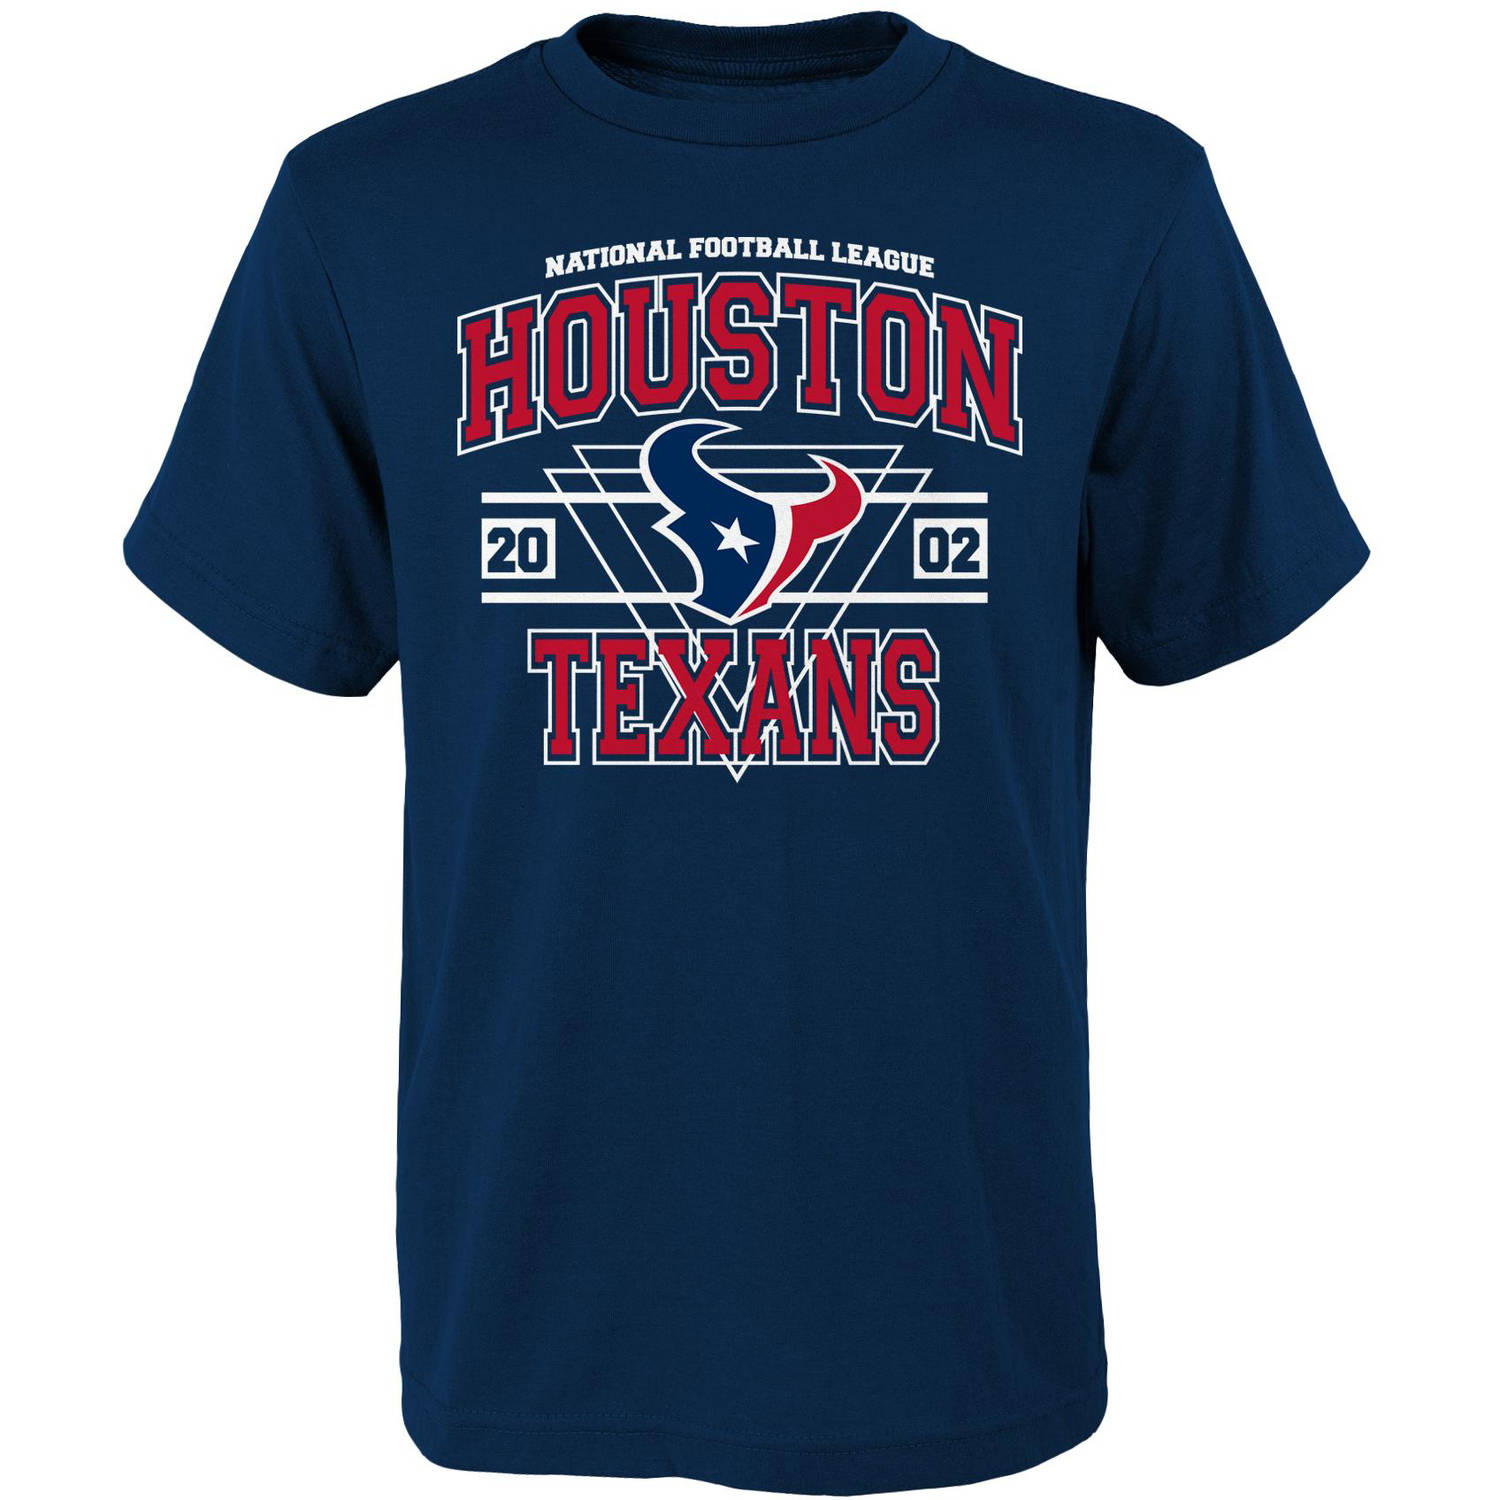 NFL Boys' Houston Texans Short Sleeve Team Tee - image 1 of 1